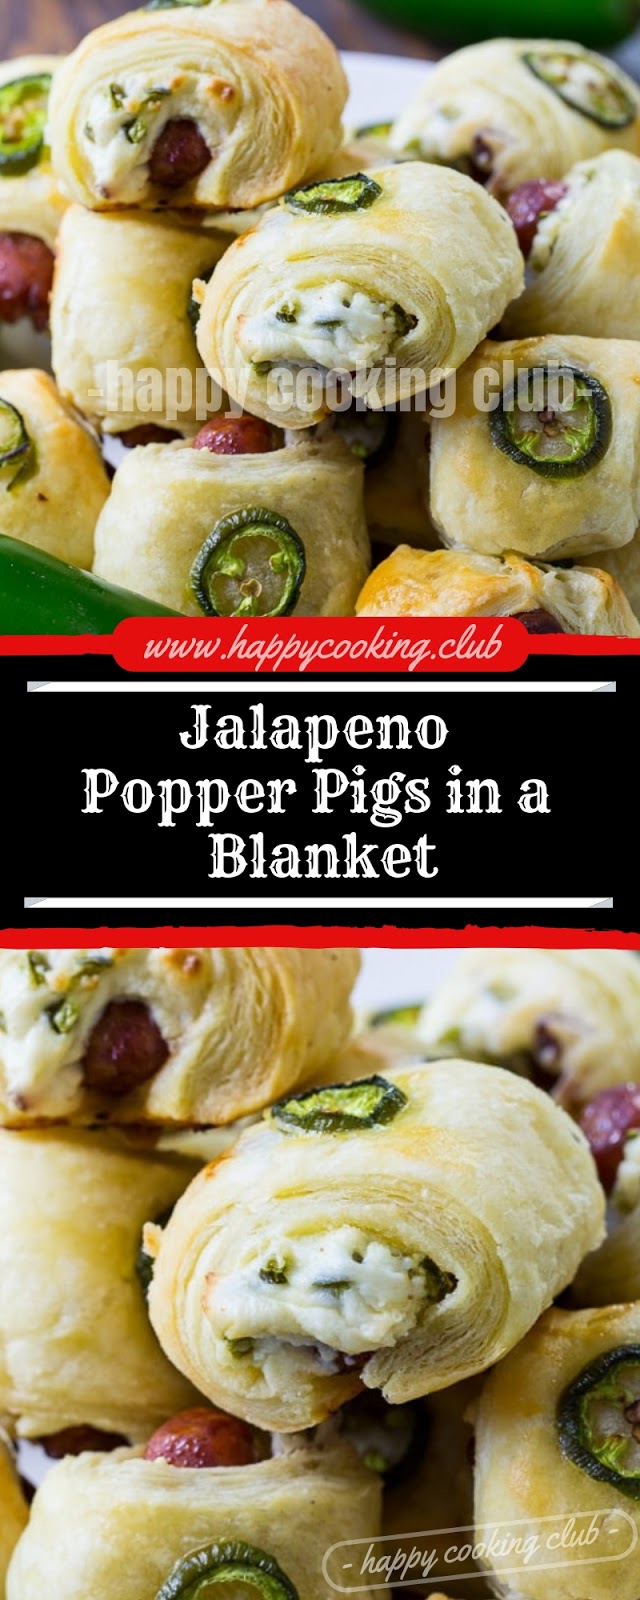 Jalapeno Popper Pigs in a Blanket